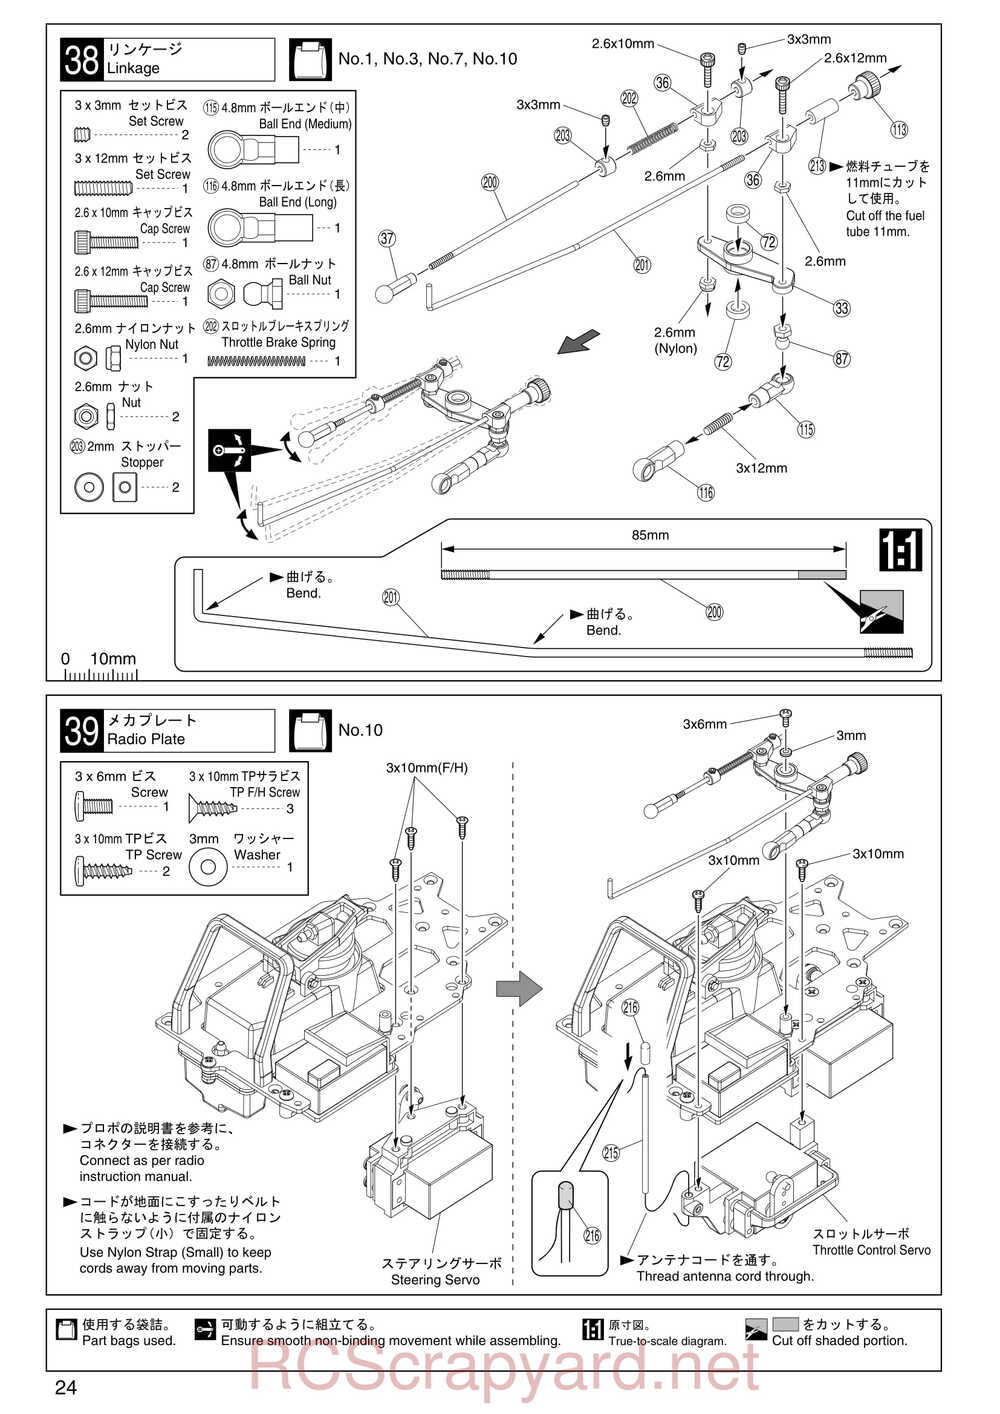 Kyosho - 31256 - V-One RRR - Manual - Page 24